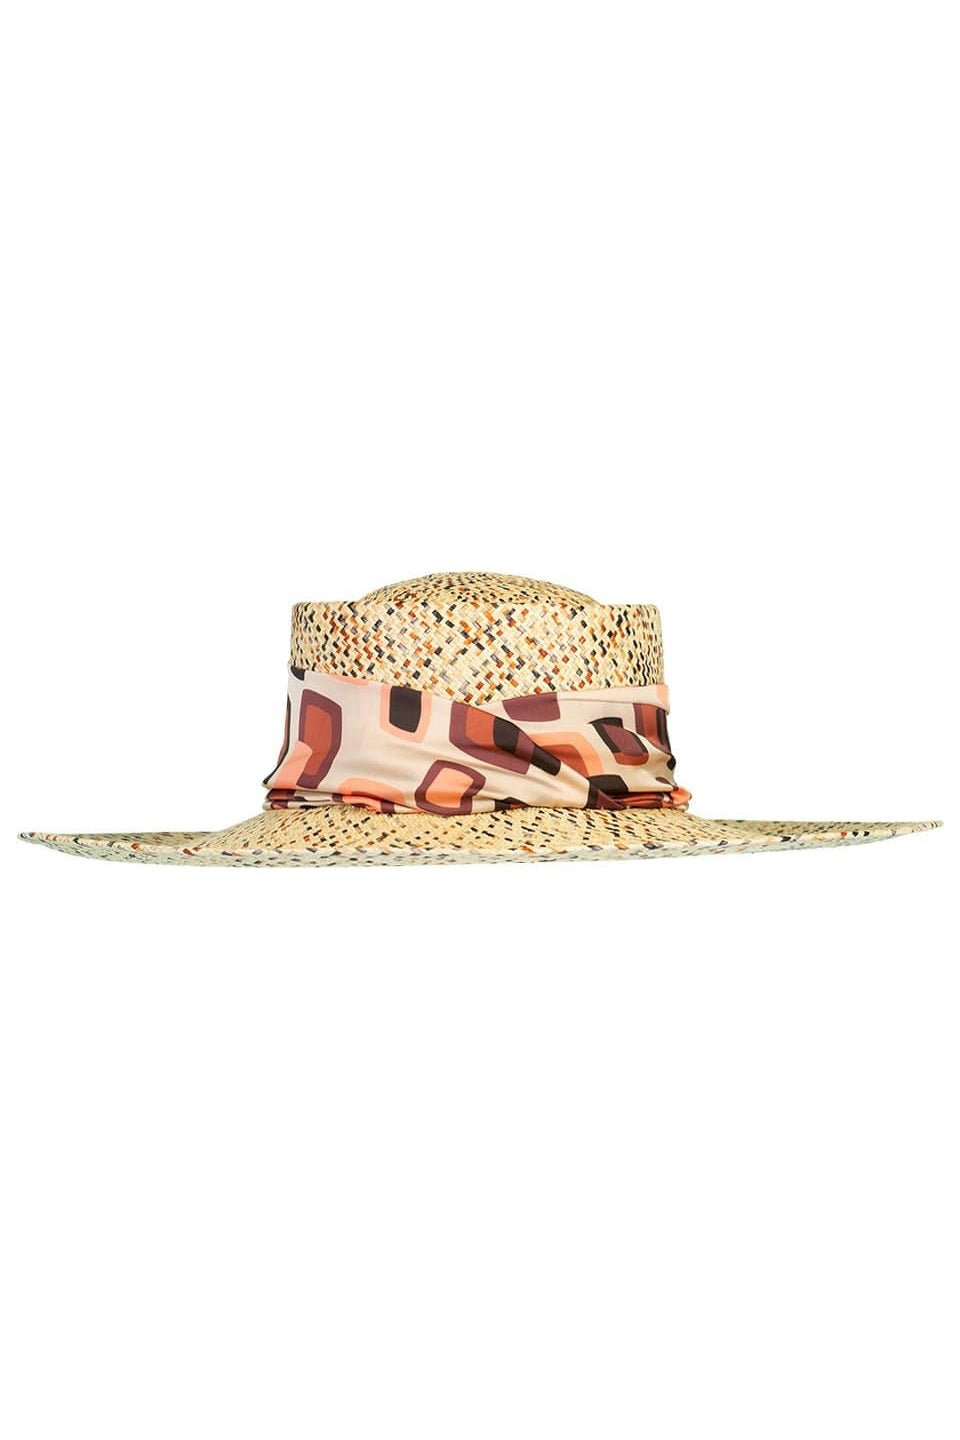 RAFFAELLO BETTINI-Real Panama Staw Hat - Multi-